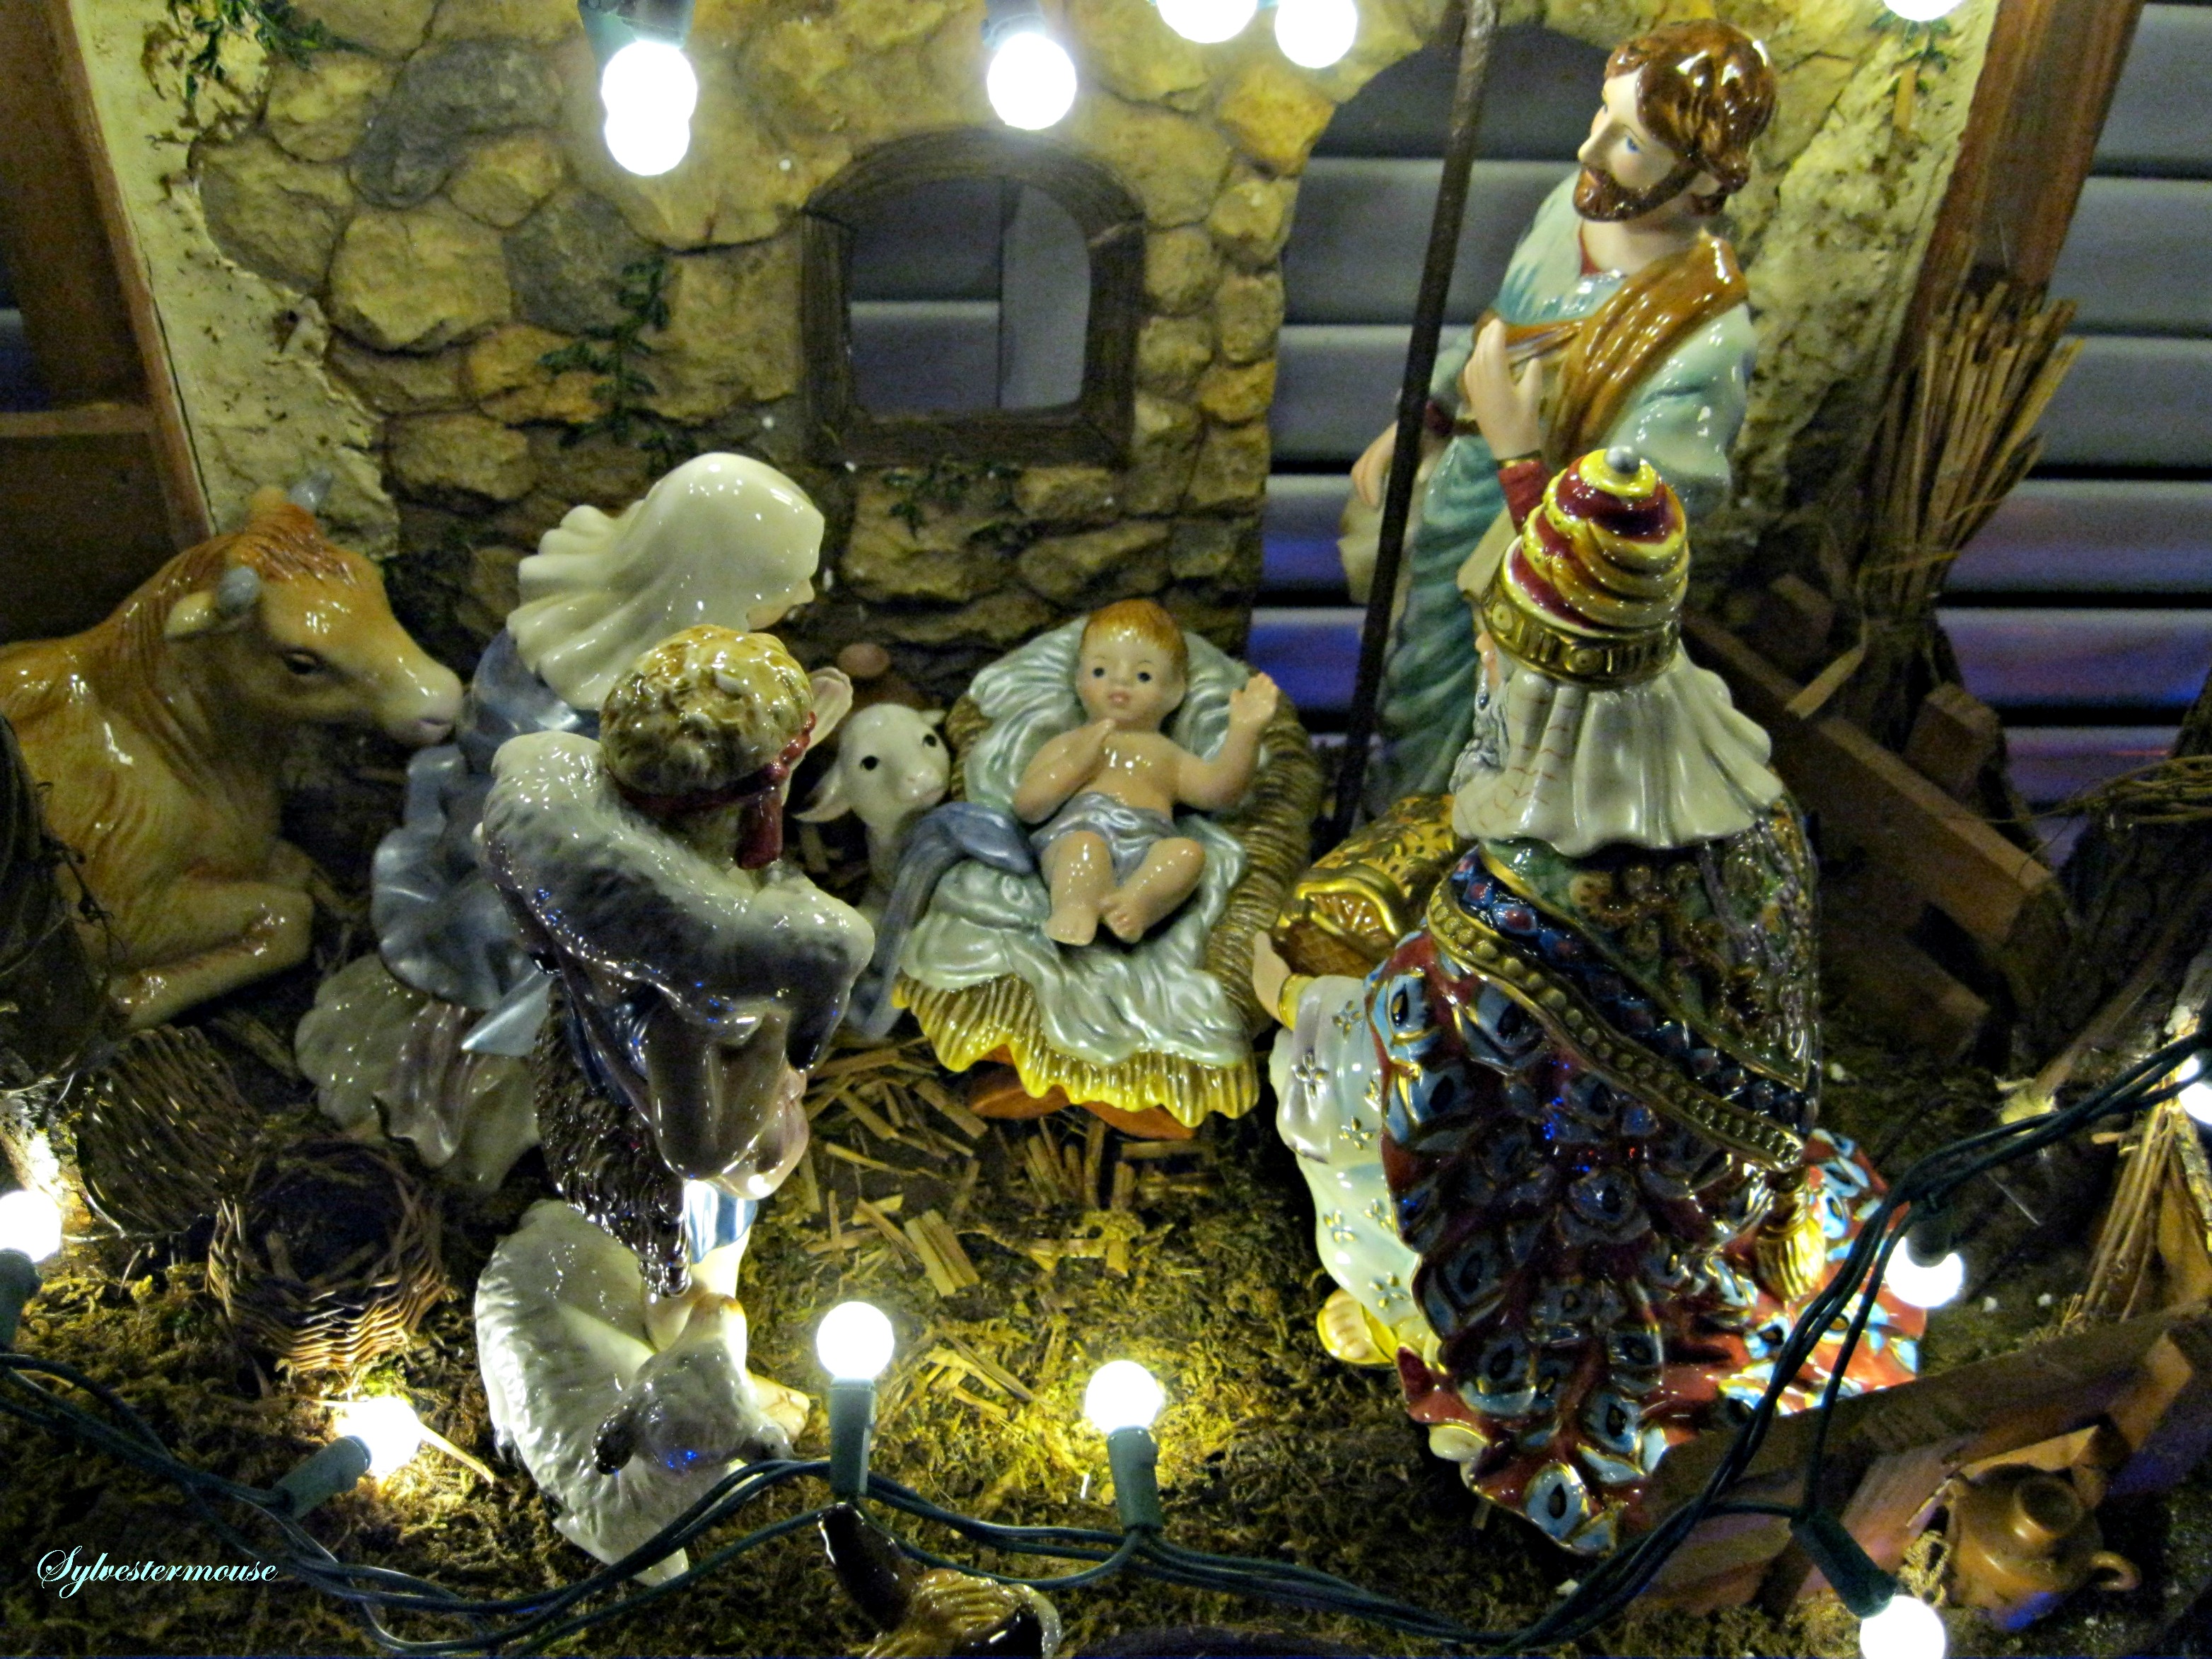 Nativity Scene photo by Sylvestermouse